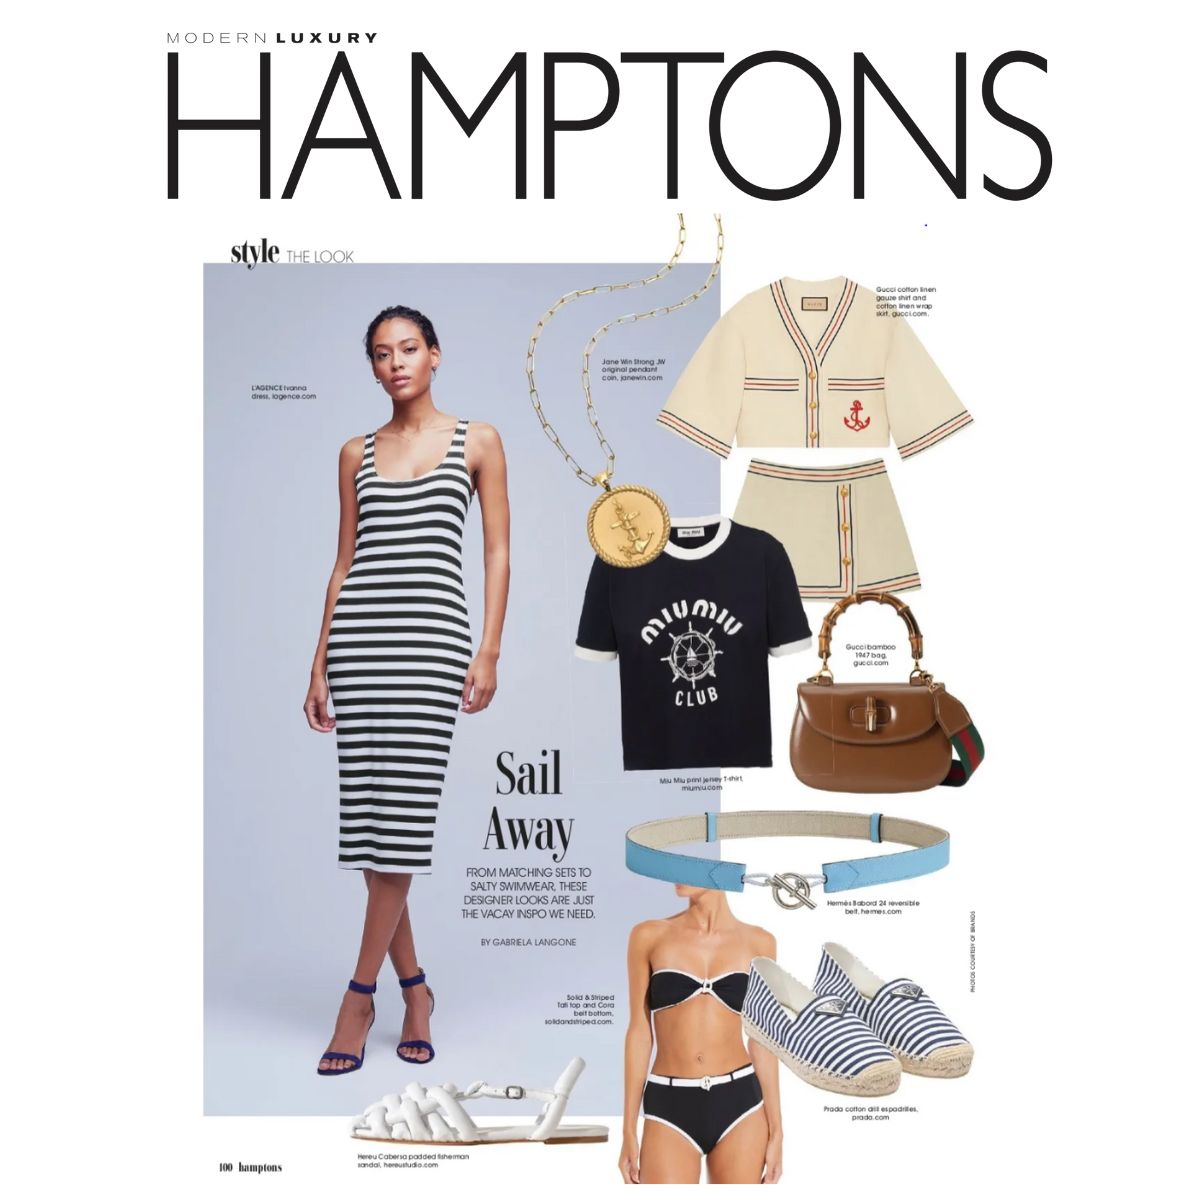 Press Highlight: Hamptons Magazine 'Sail Away' Style Feature